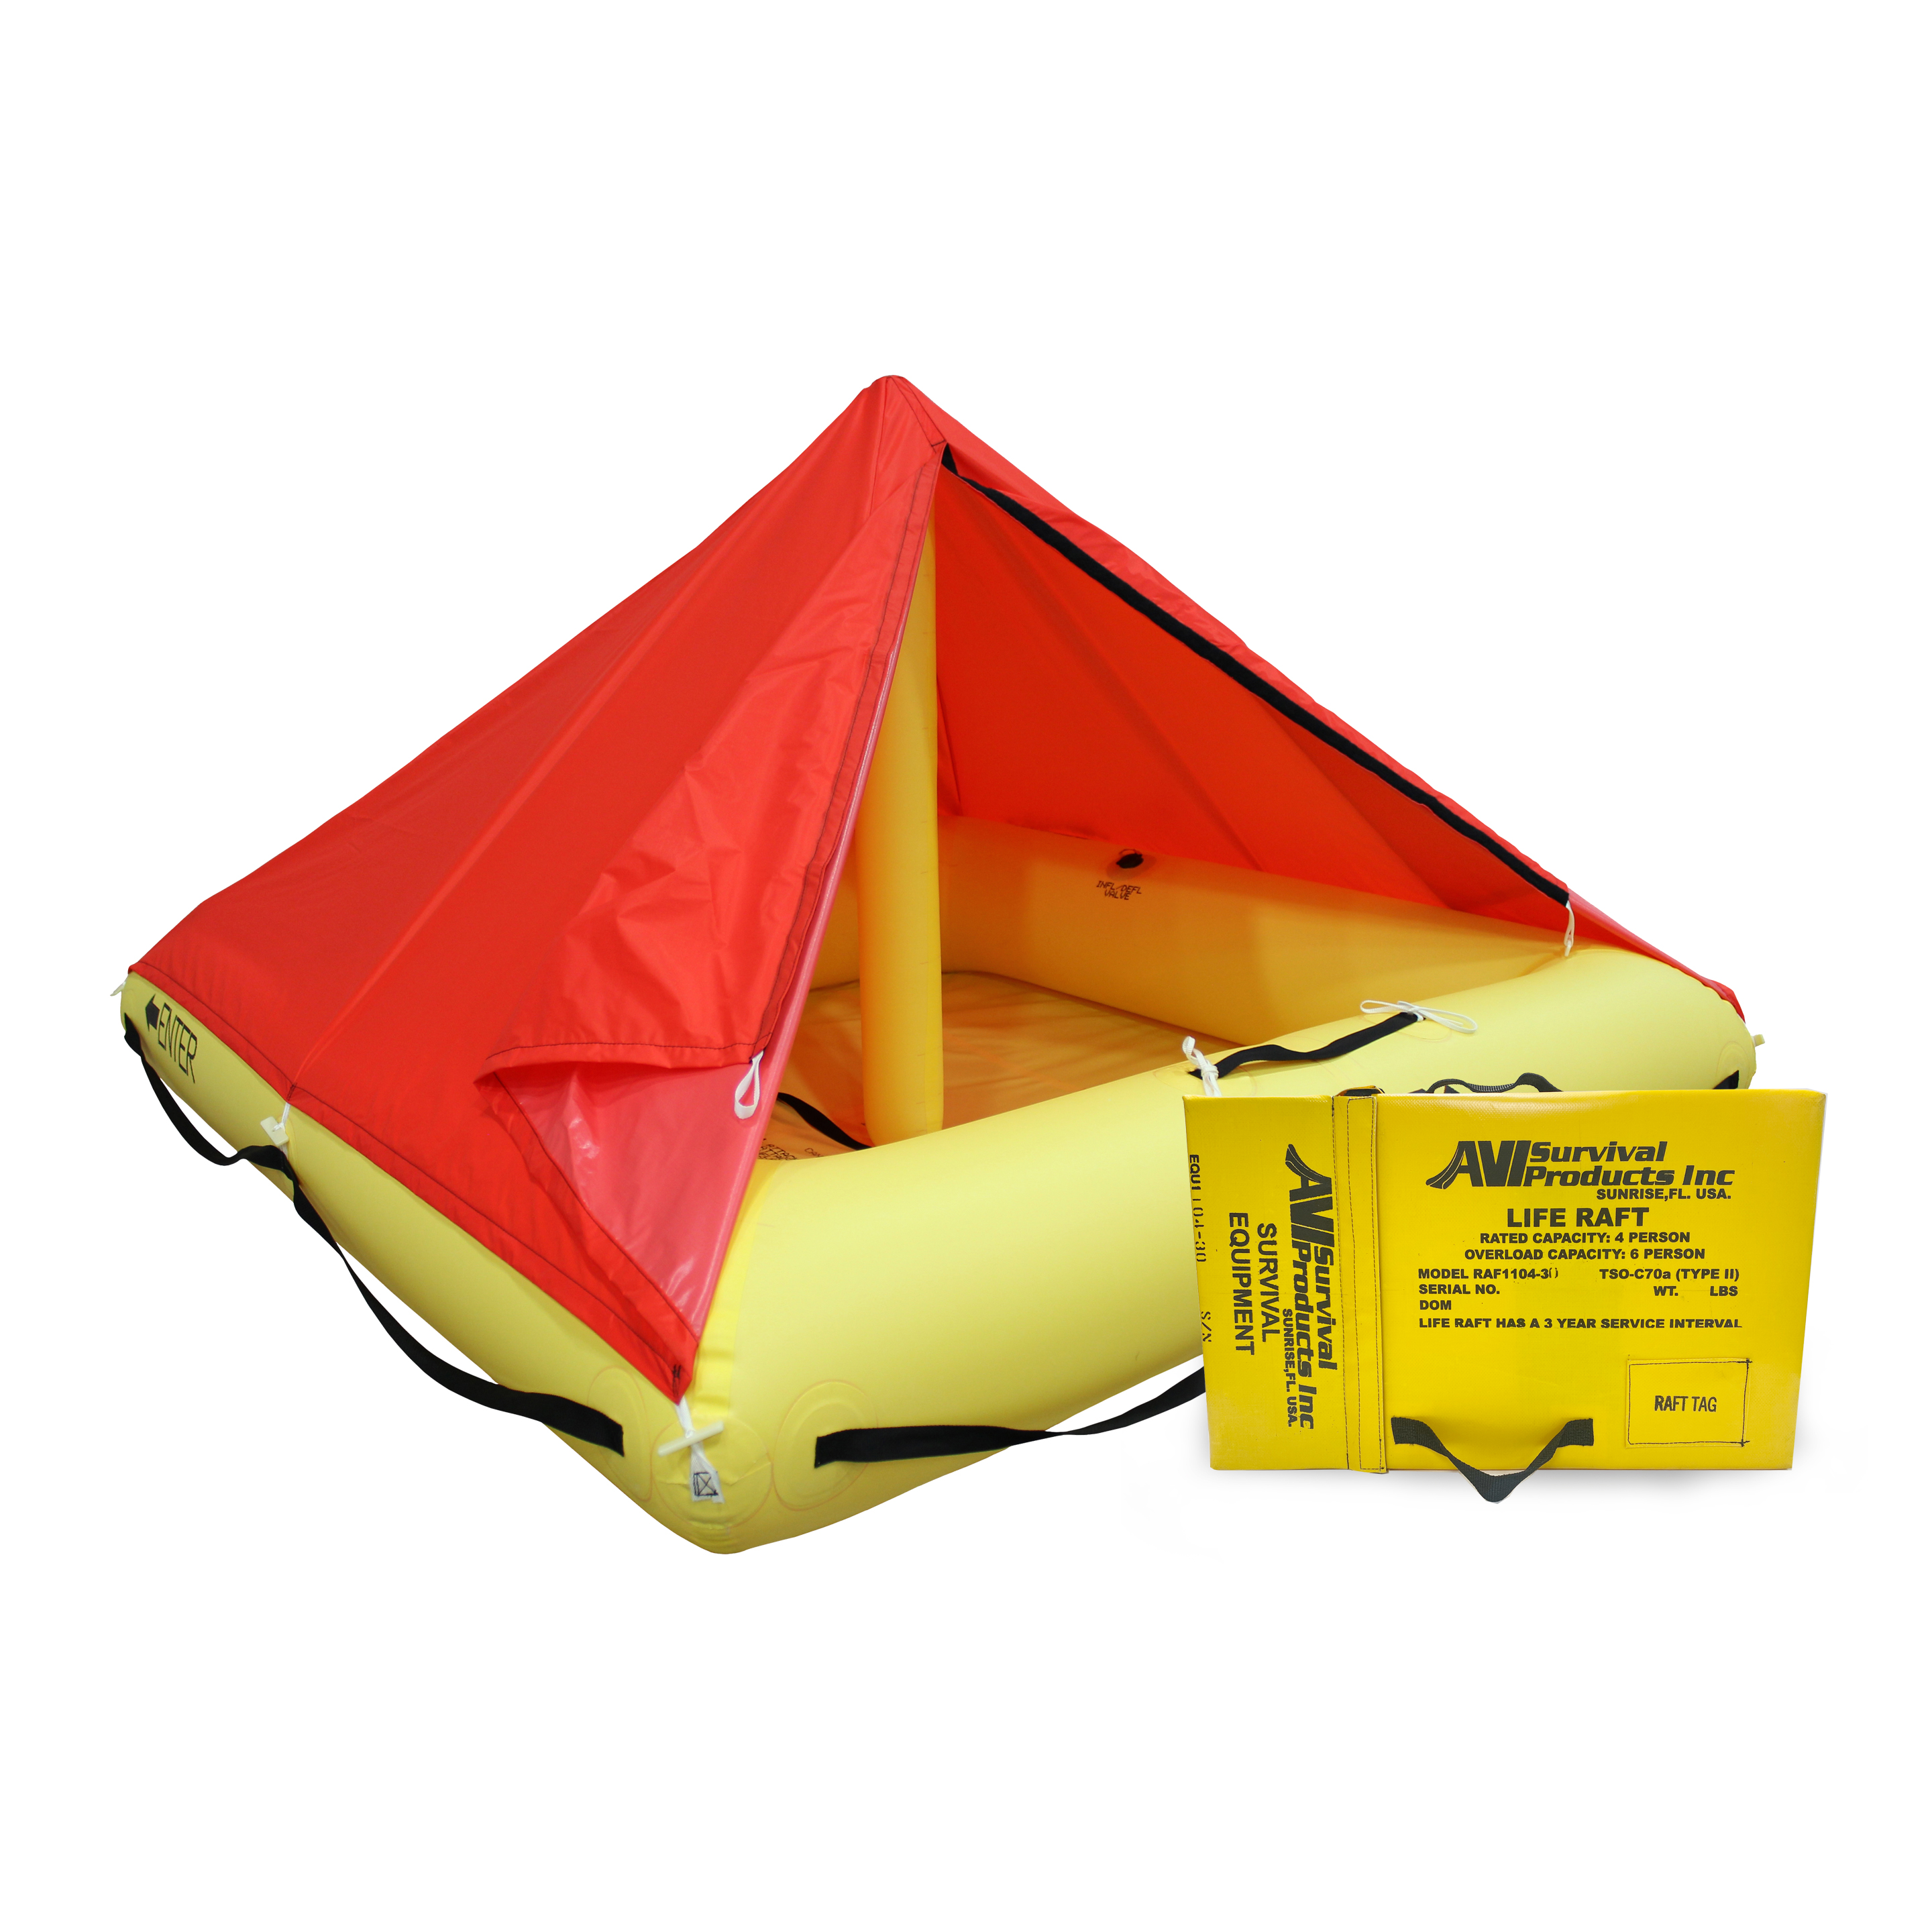 TSO 4 Person Life Raft with FAR 135 Survival Equipment Kit